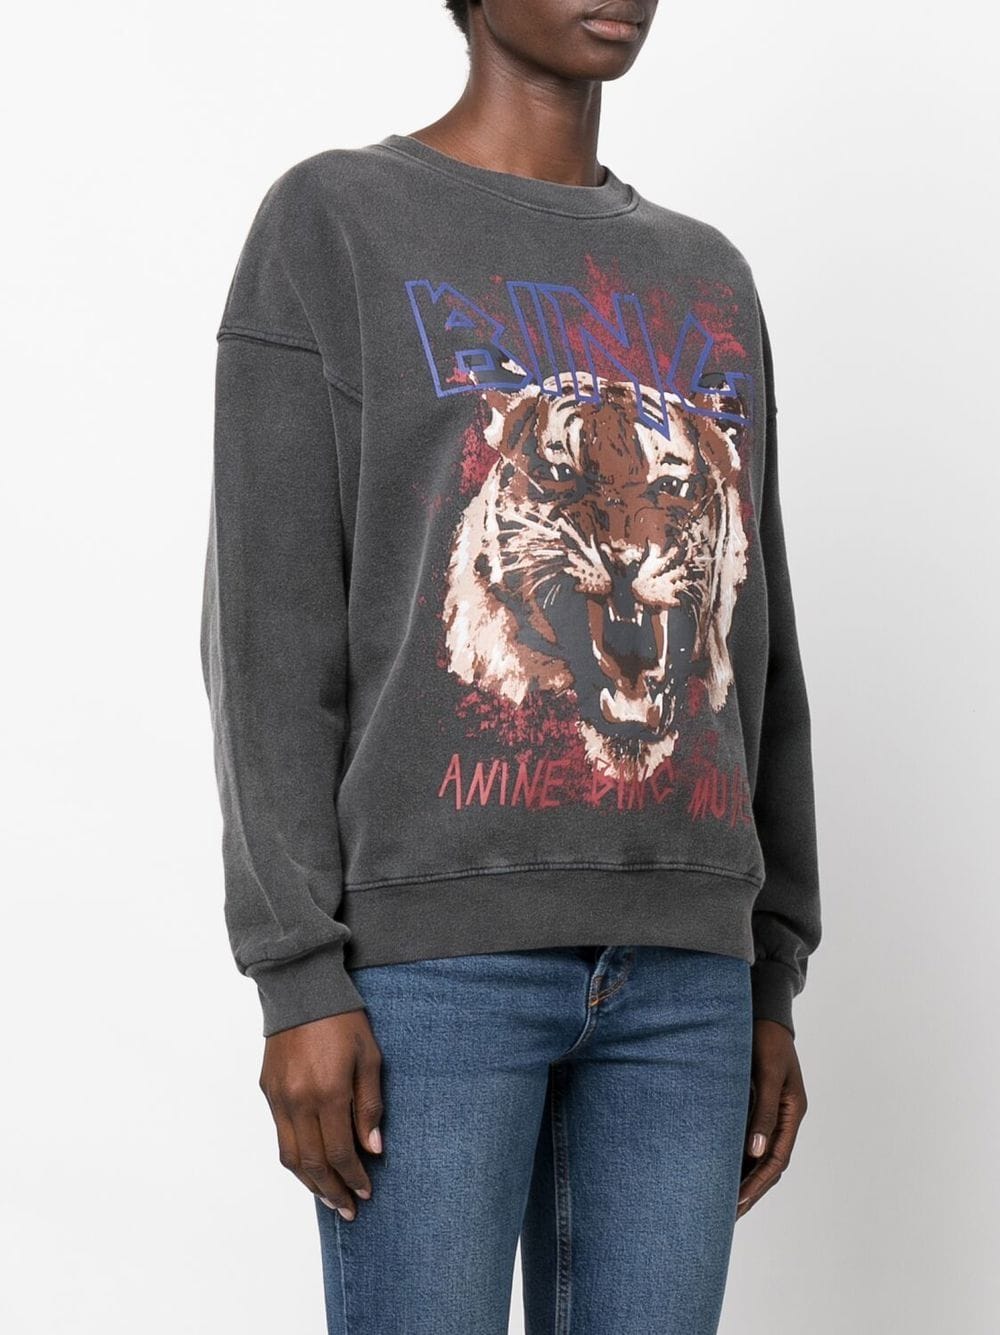 NWT Anine Bing tiger sweatshirt sz XS